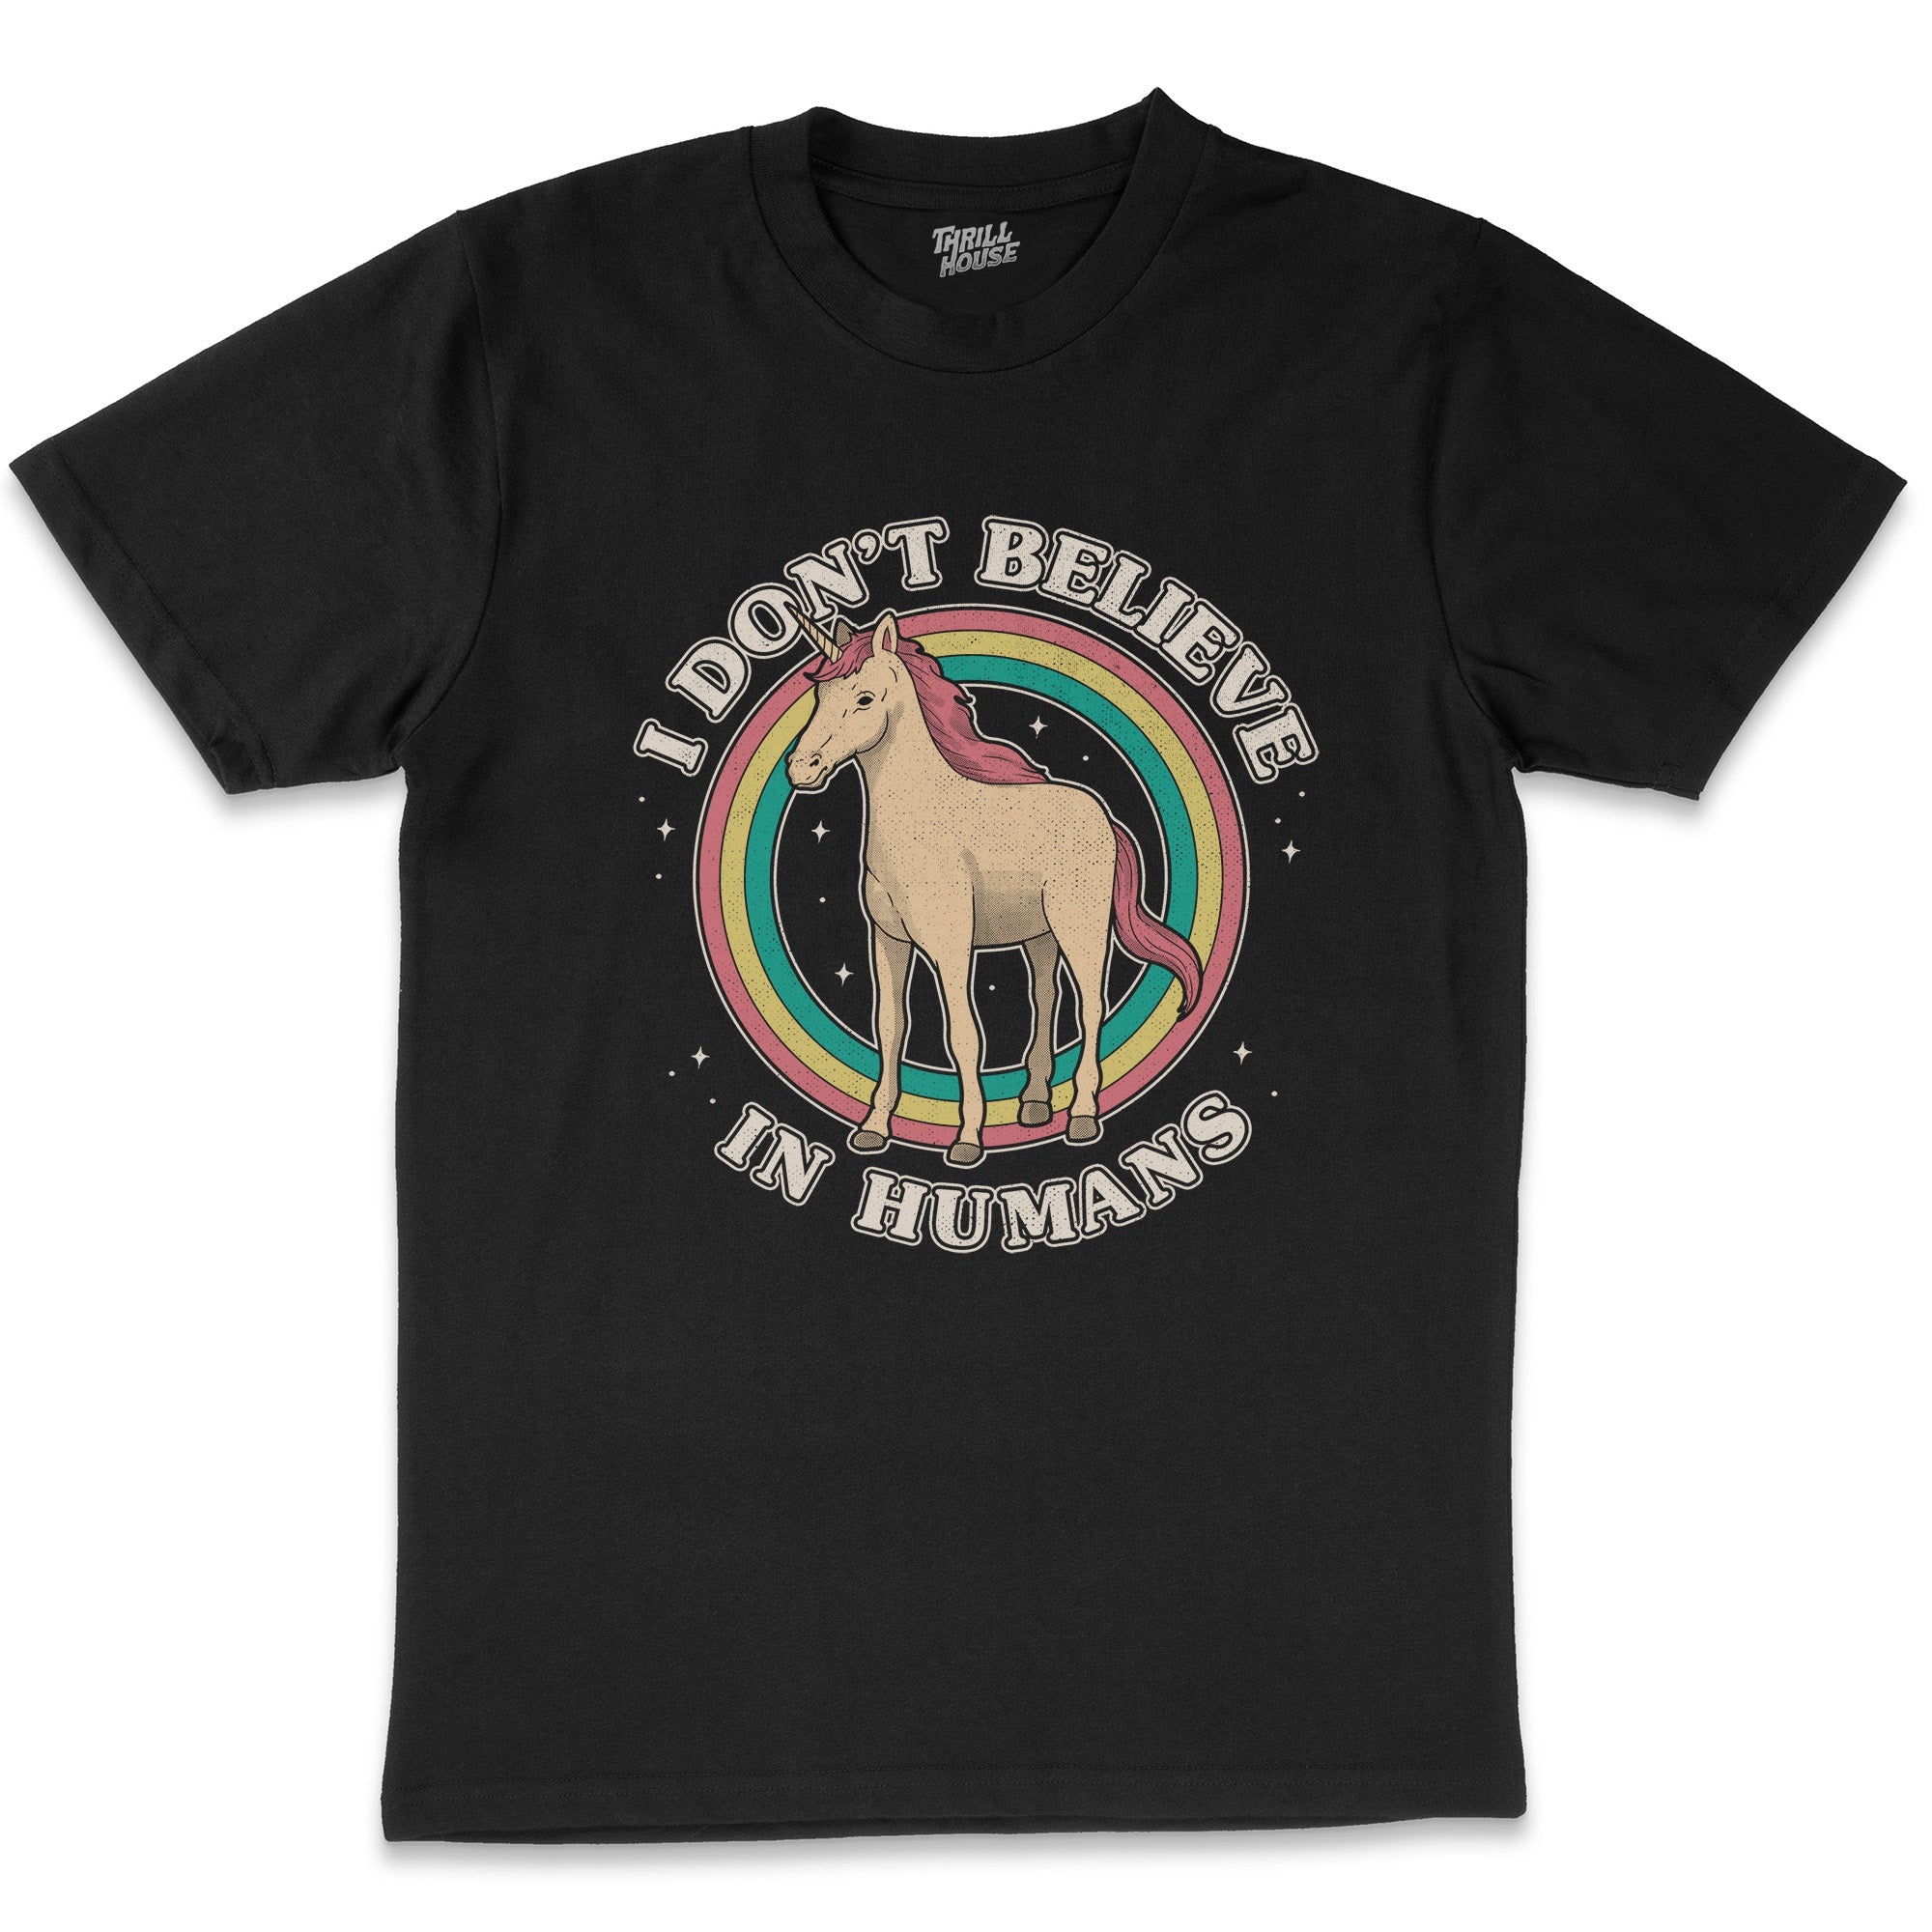 Believe In Humans T-Shirt Australia Online Black